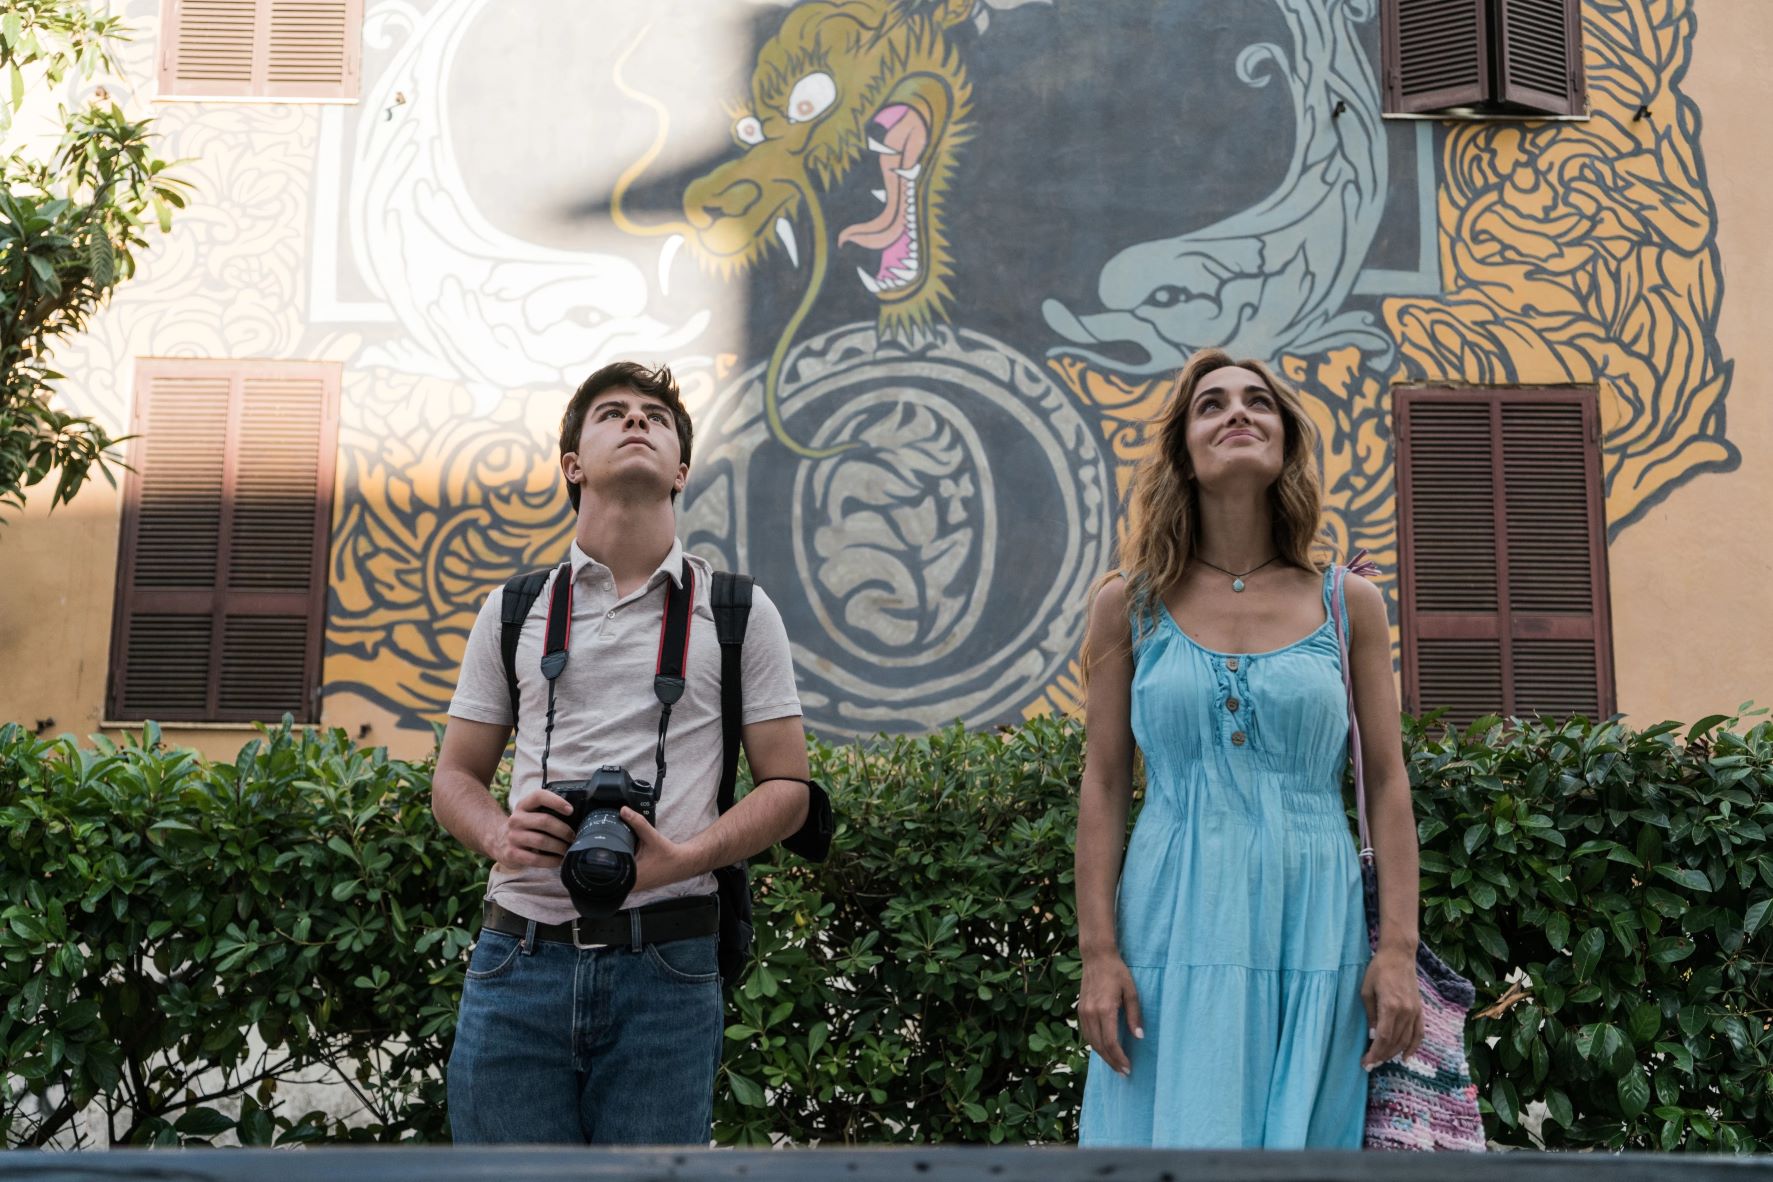 Diego (Francesco Ferrante) a sinistra e Tea (Denise Capezza) a destra guardano i murales